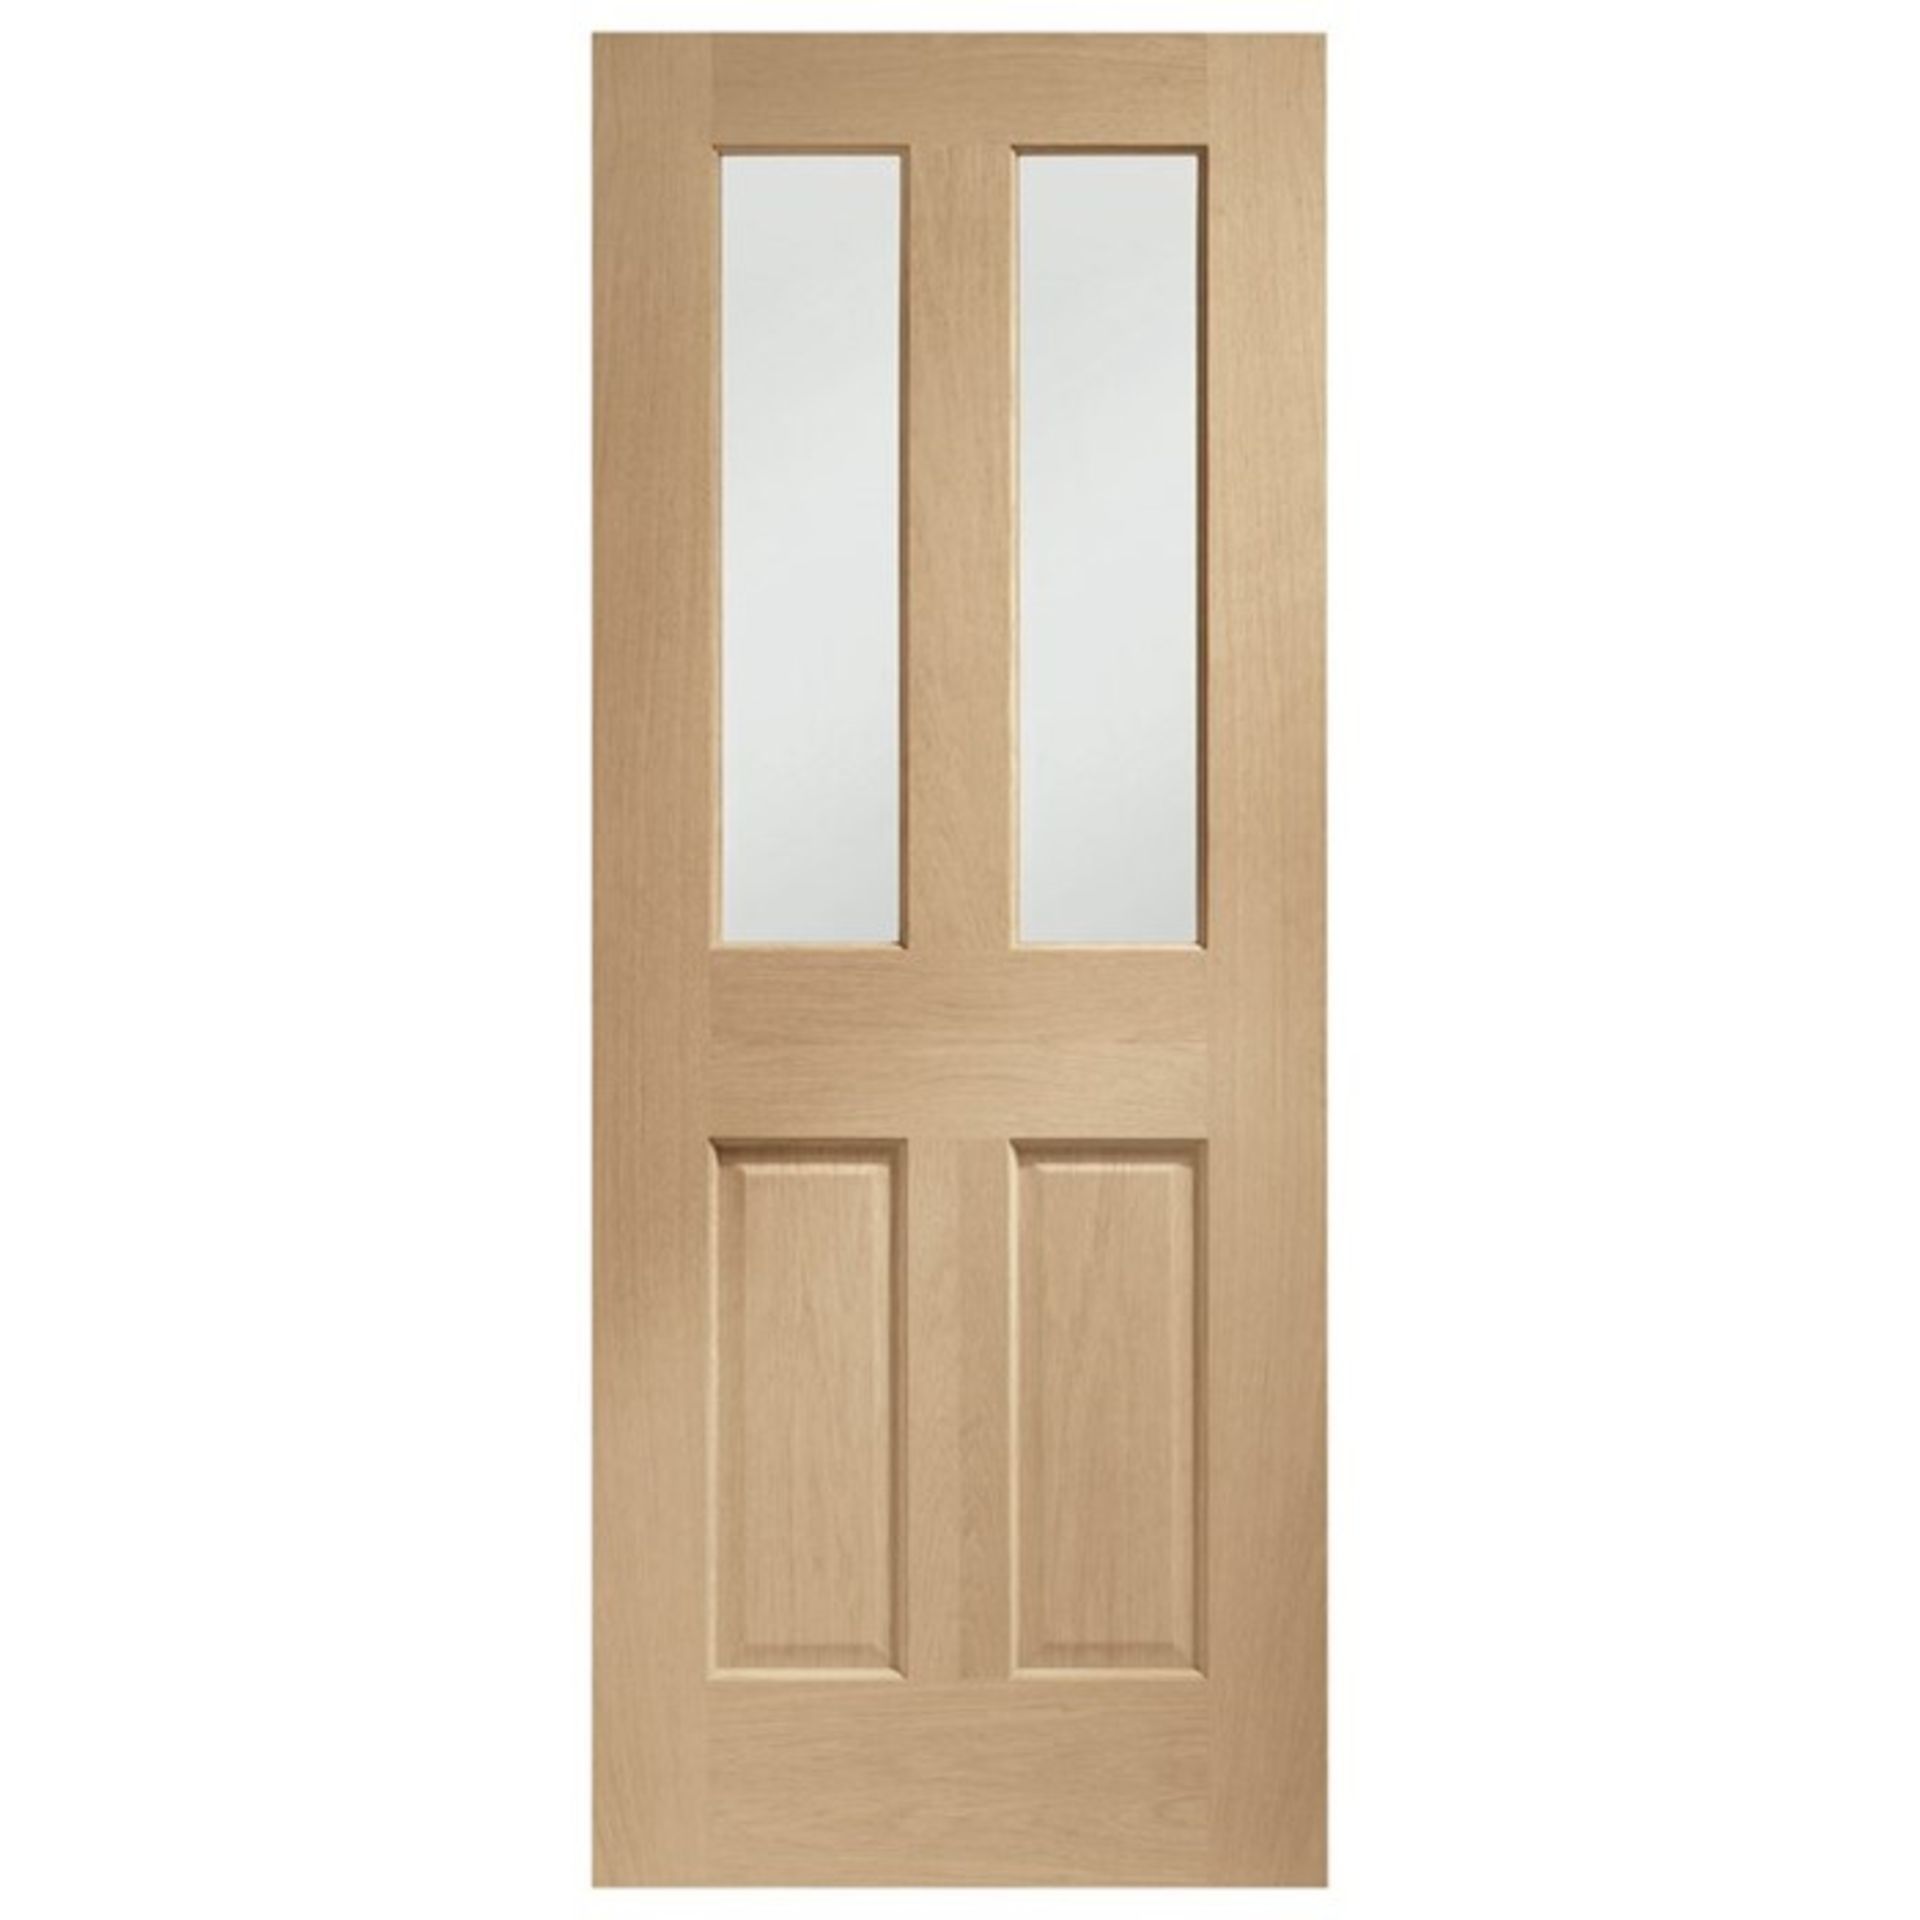 XL Joinery,Malton Internal Door Unfinished RRP -£128.99(20592/3 -SDJD1496) (78 1/4 x 33 1/4")